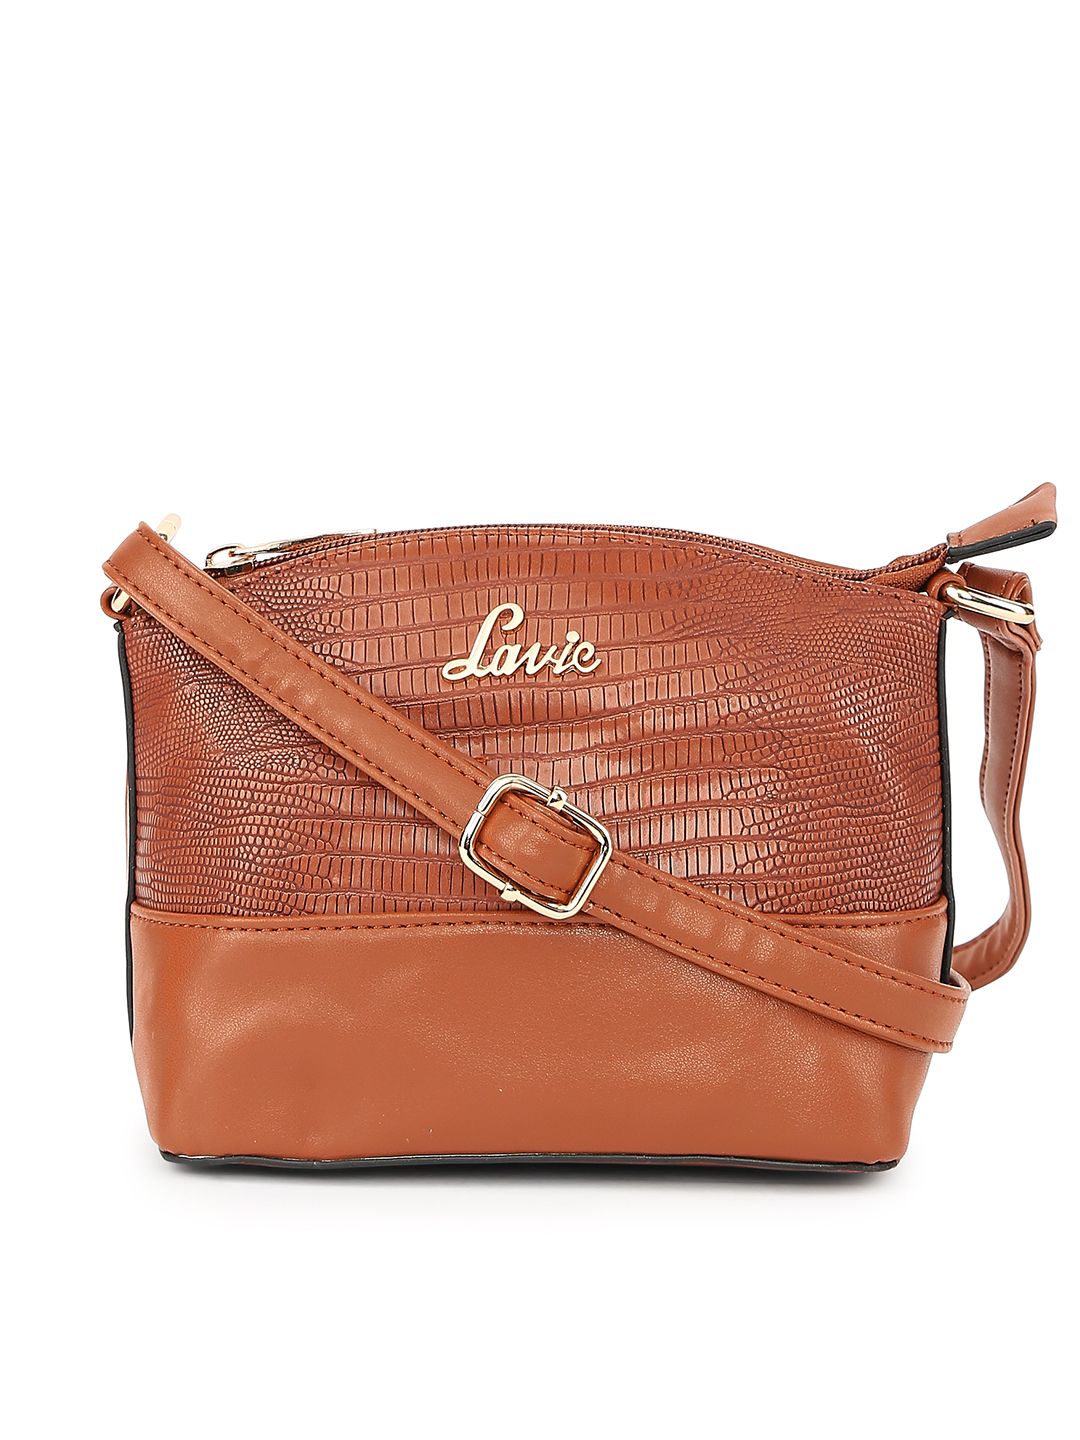 Lavie Brown Textured Sling Bag Price in India